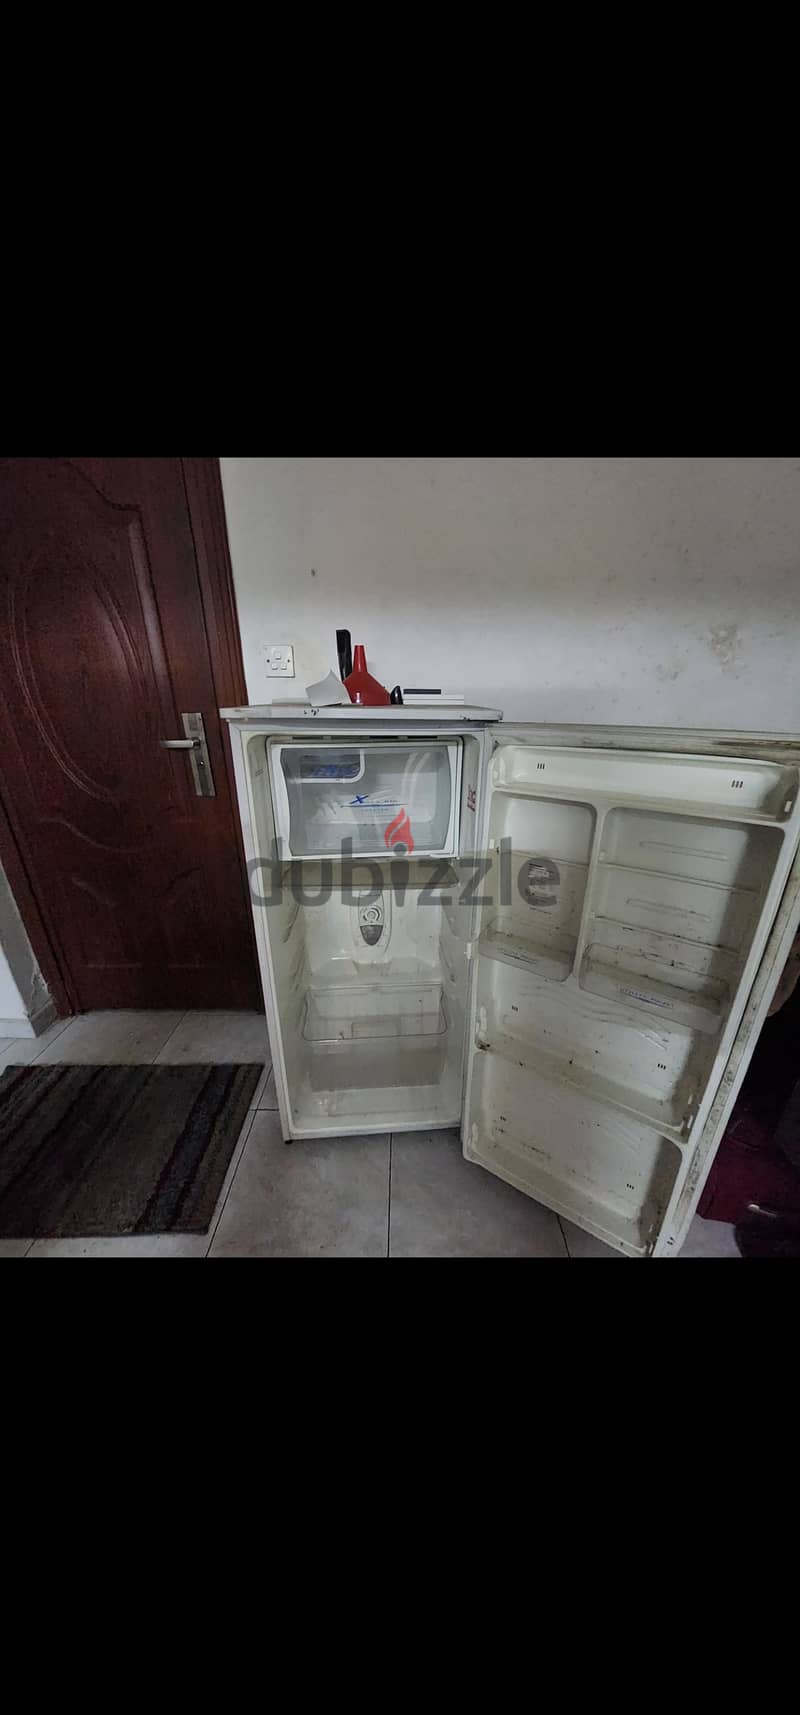 Used fridge for sale 2